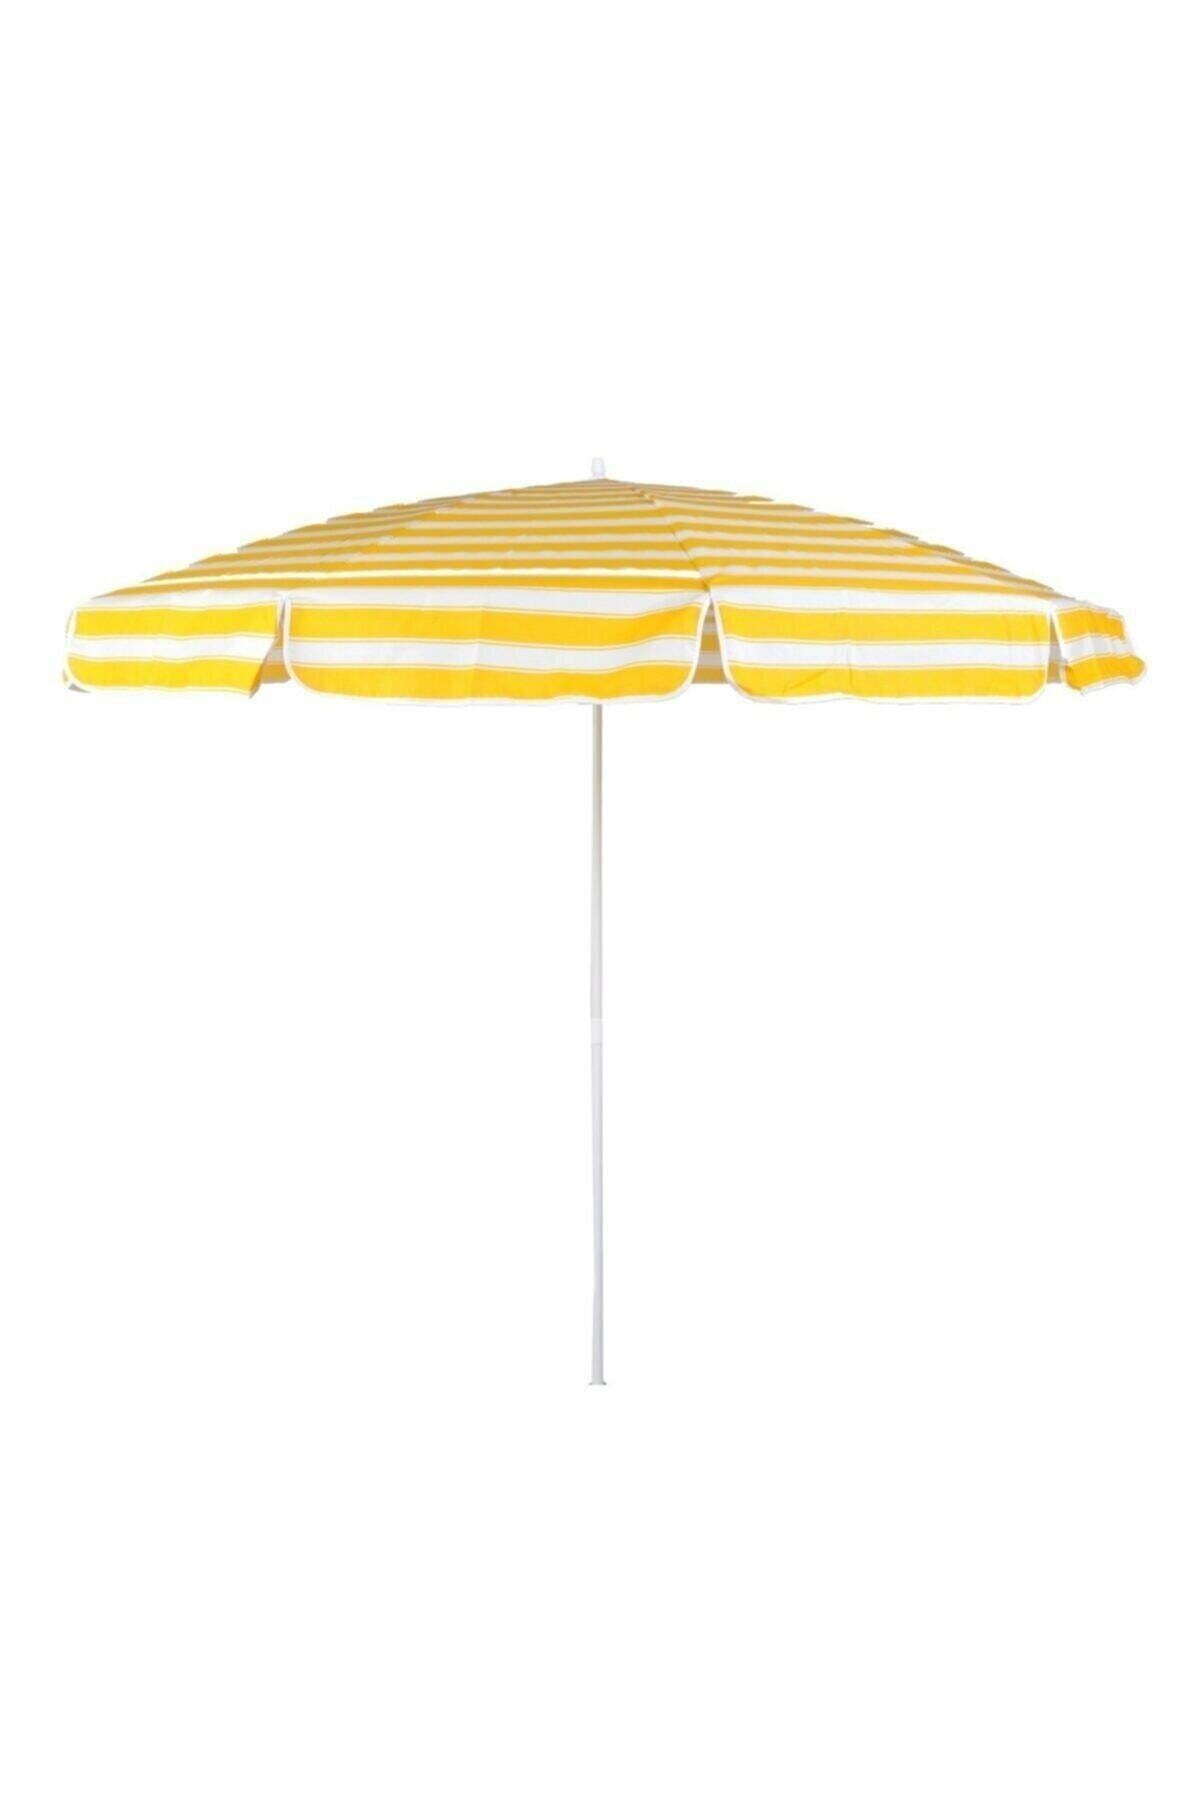 matchbang 2 Metre Sarı Plaj Şemsiyesi(bidonsuz)